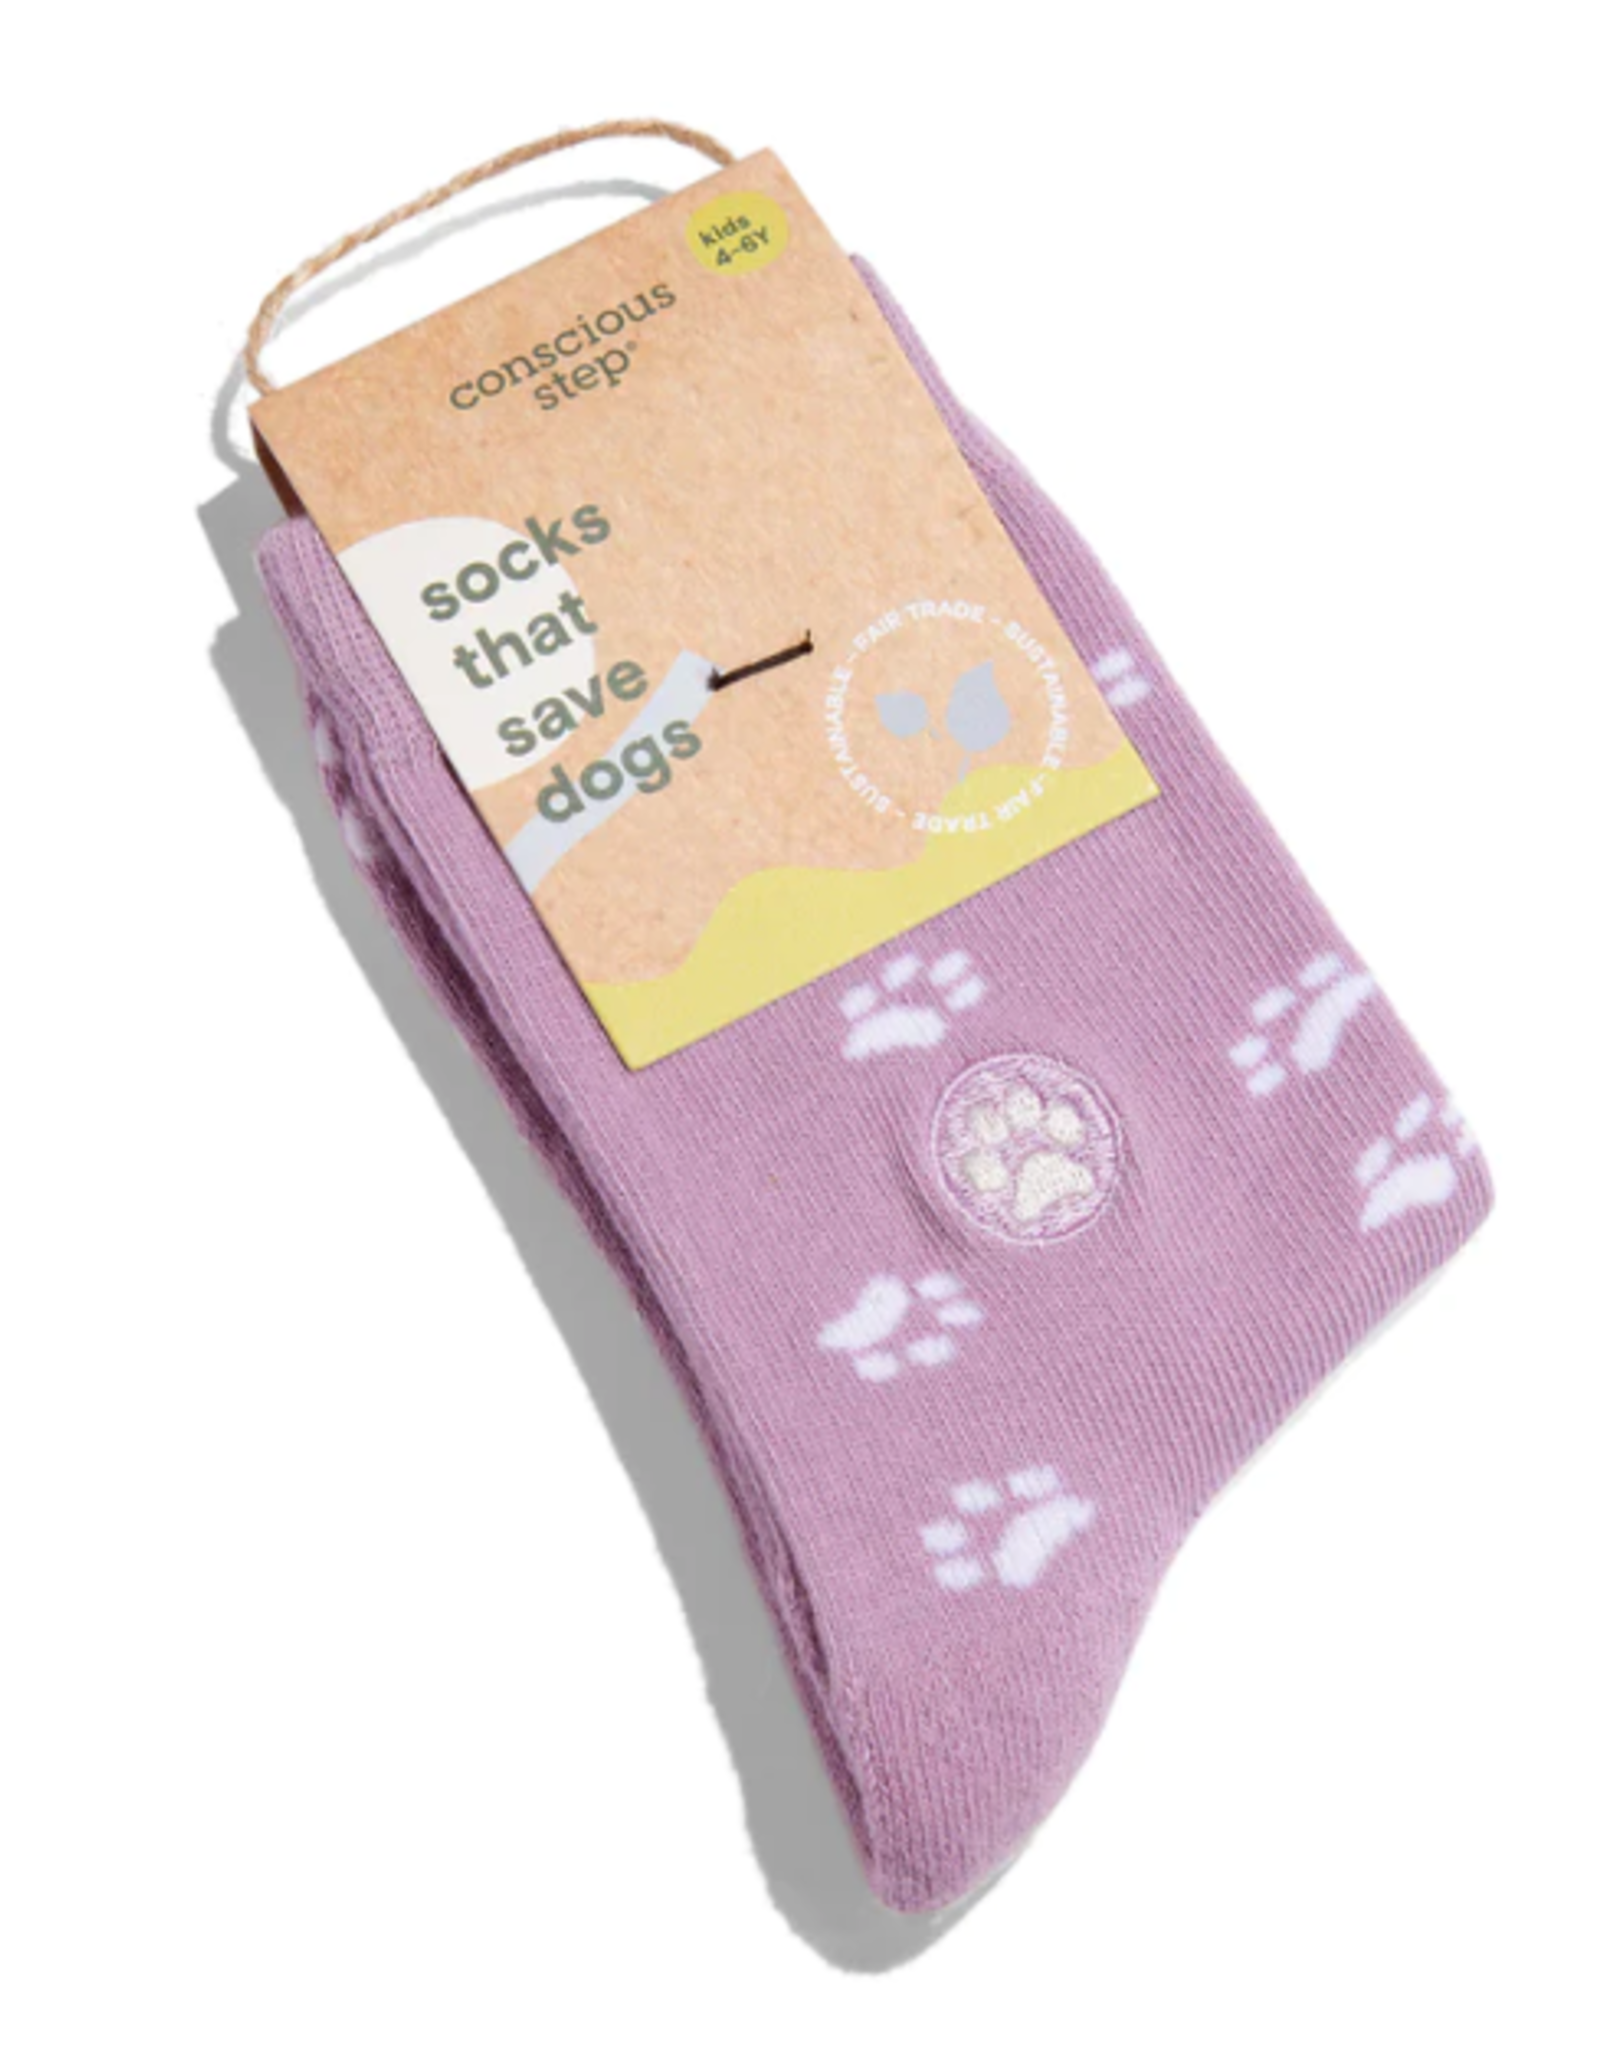 Conscious Step Kids Socks that Save Dogs (Purple Paw Prints)